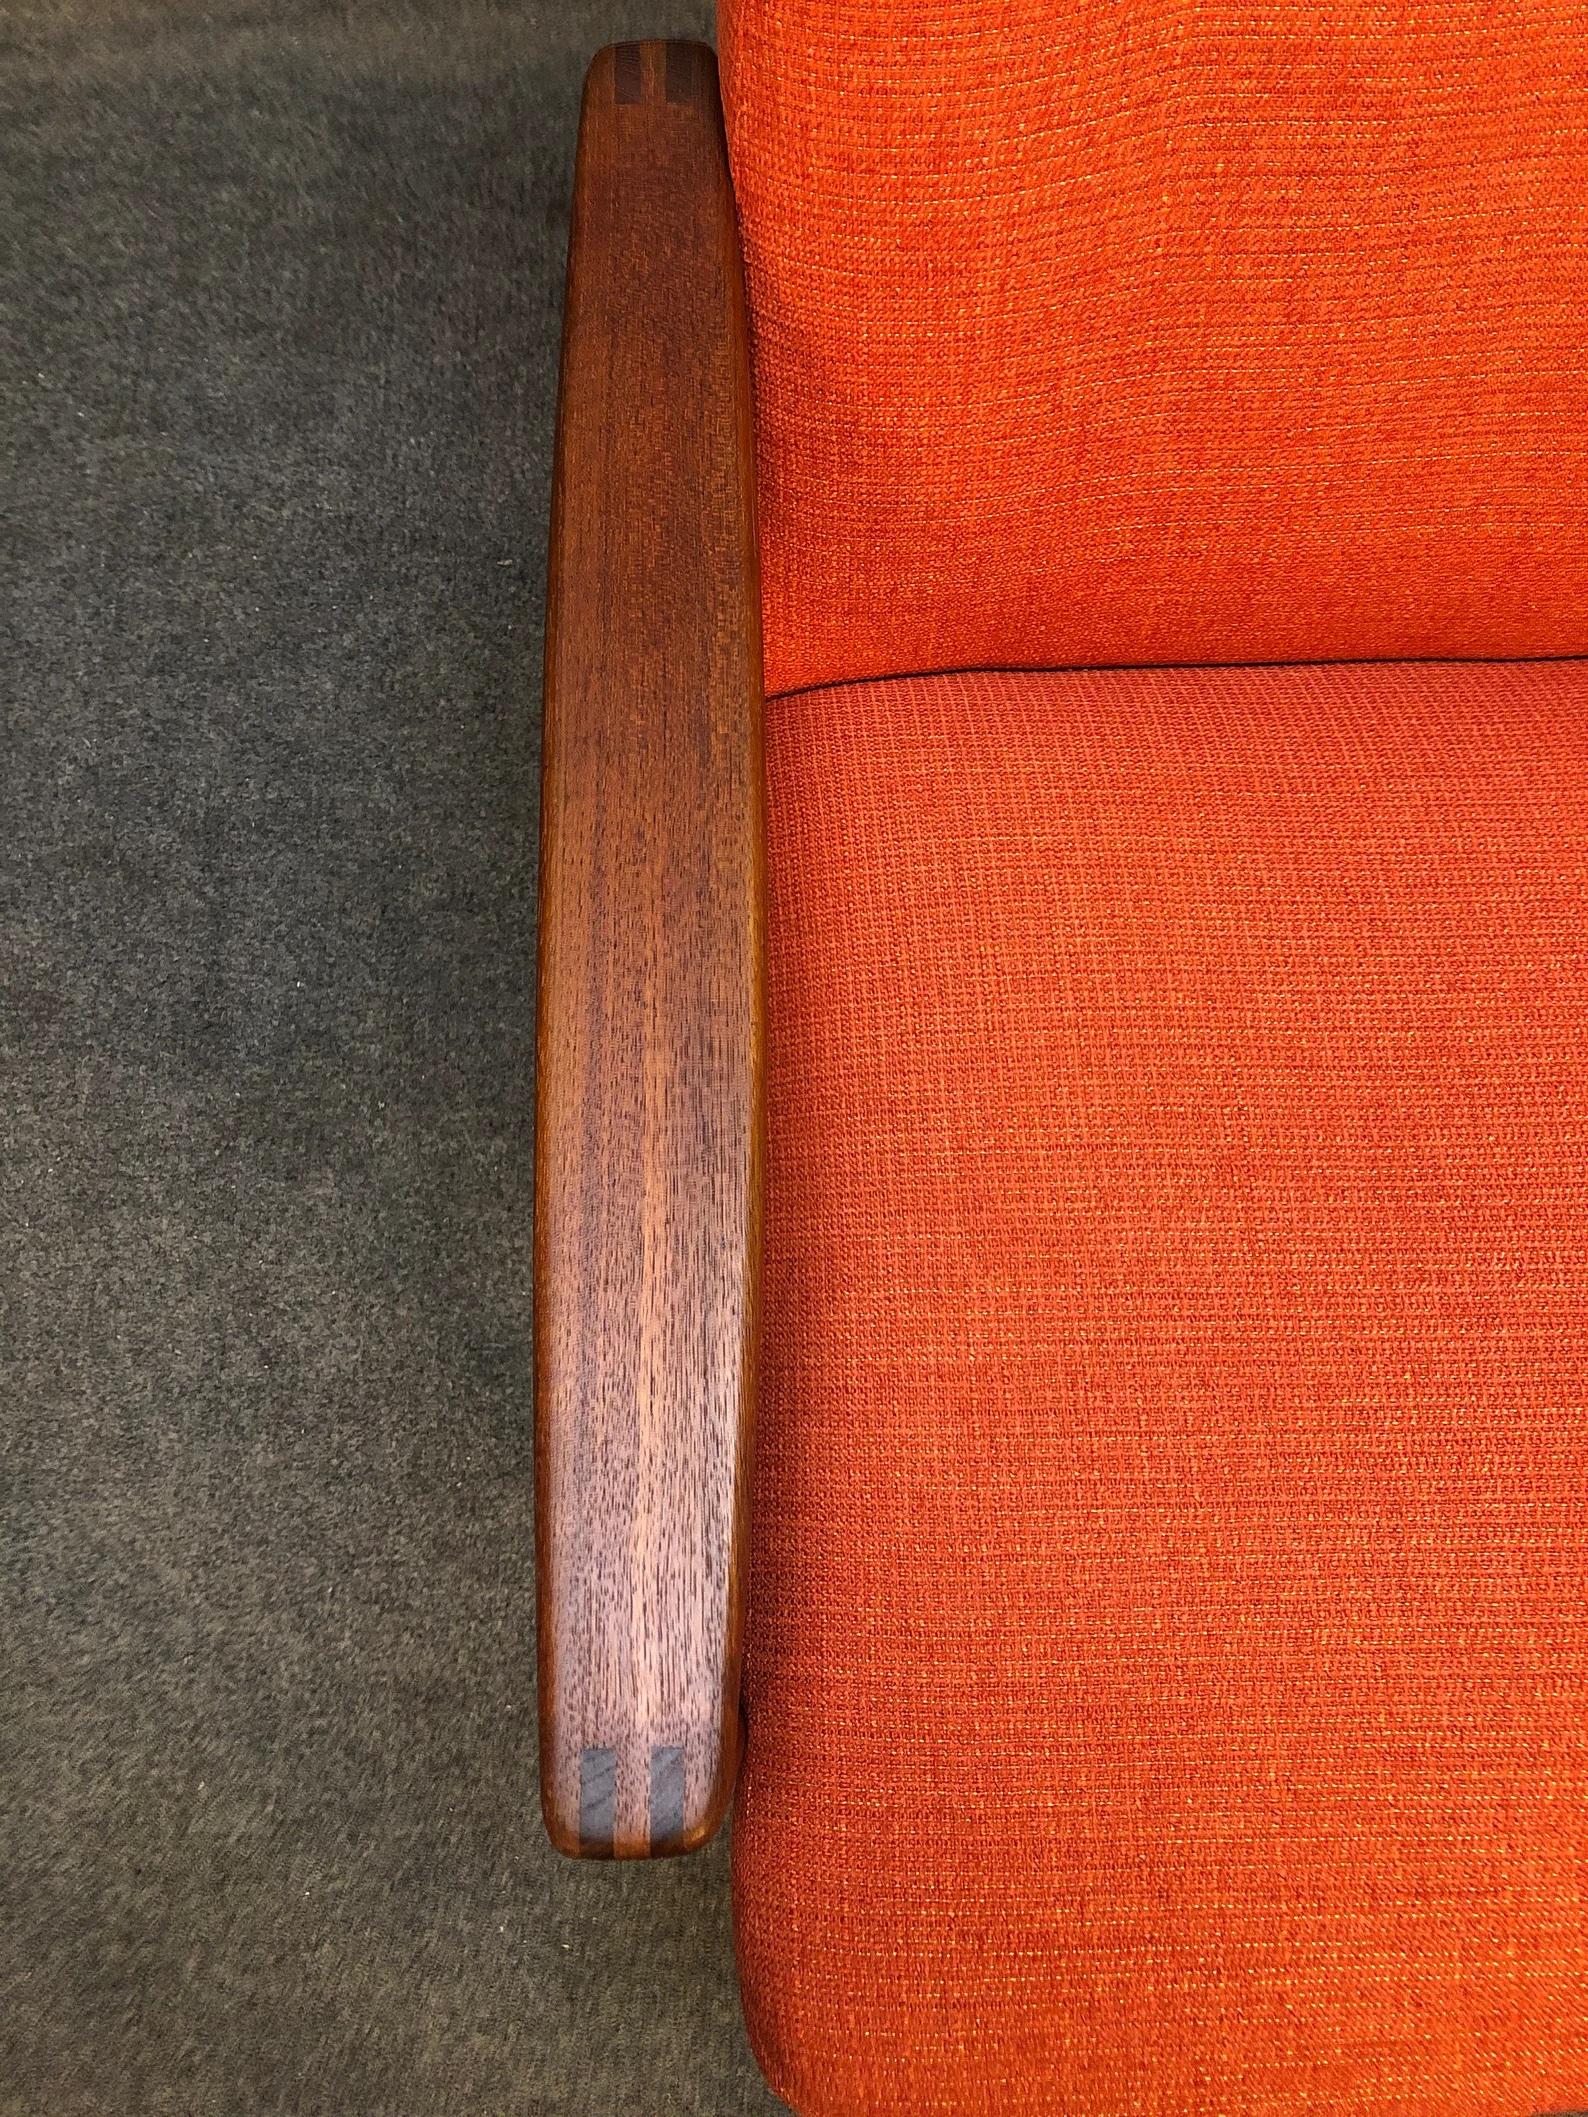 Woodwork Mid Century Danish Modern Teak High Back Lounge Chair by Ulferts Fabriker For Sale